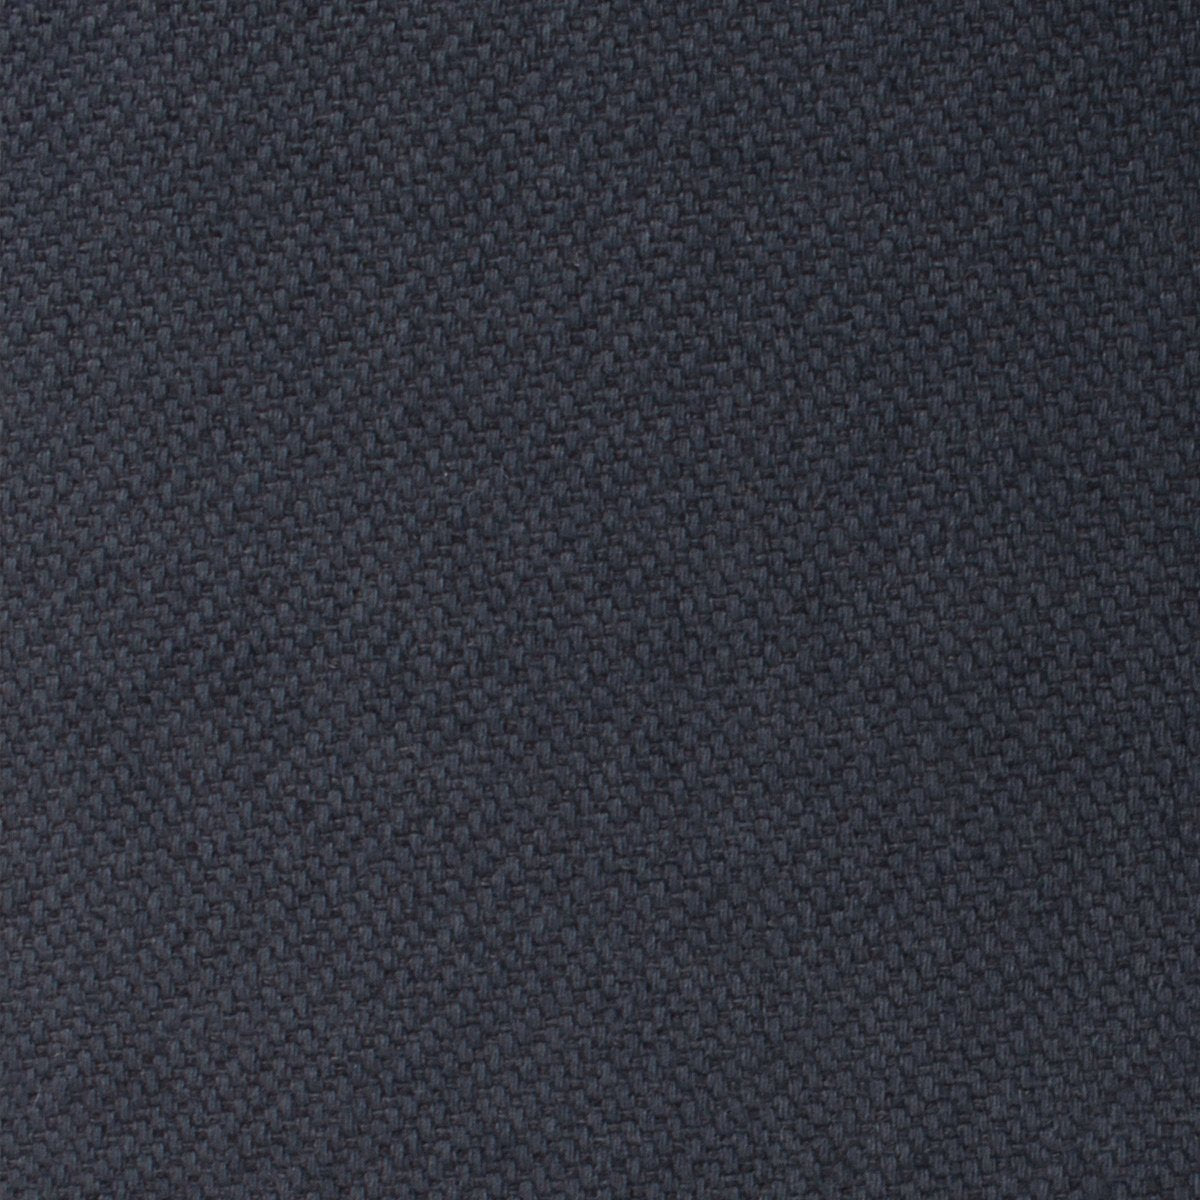 Öland Navy Blue Linen Necktie Fabric